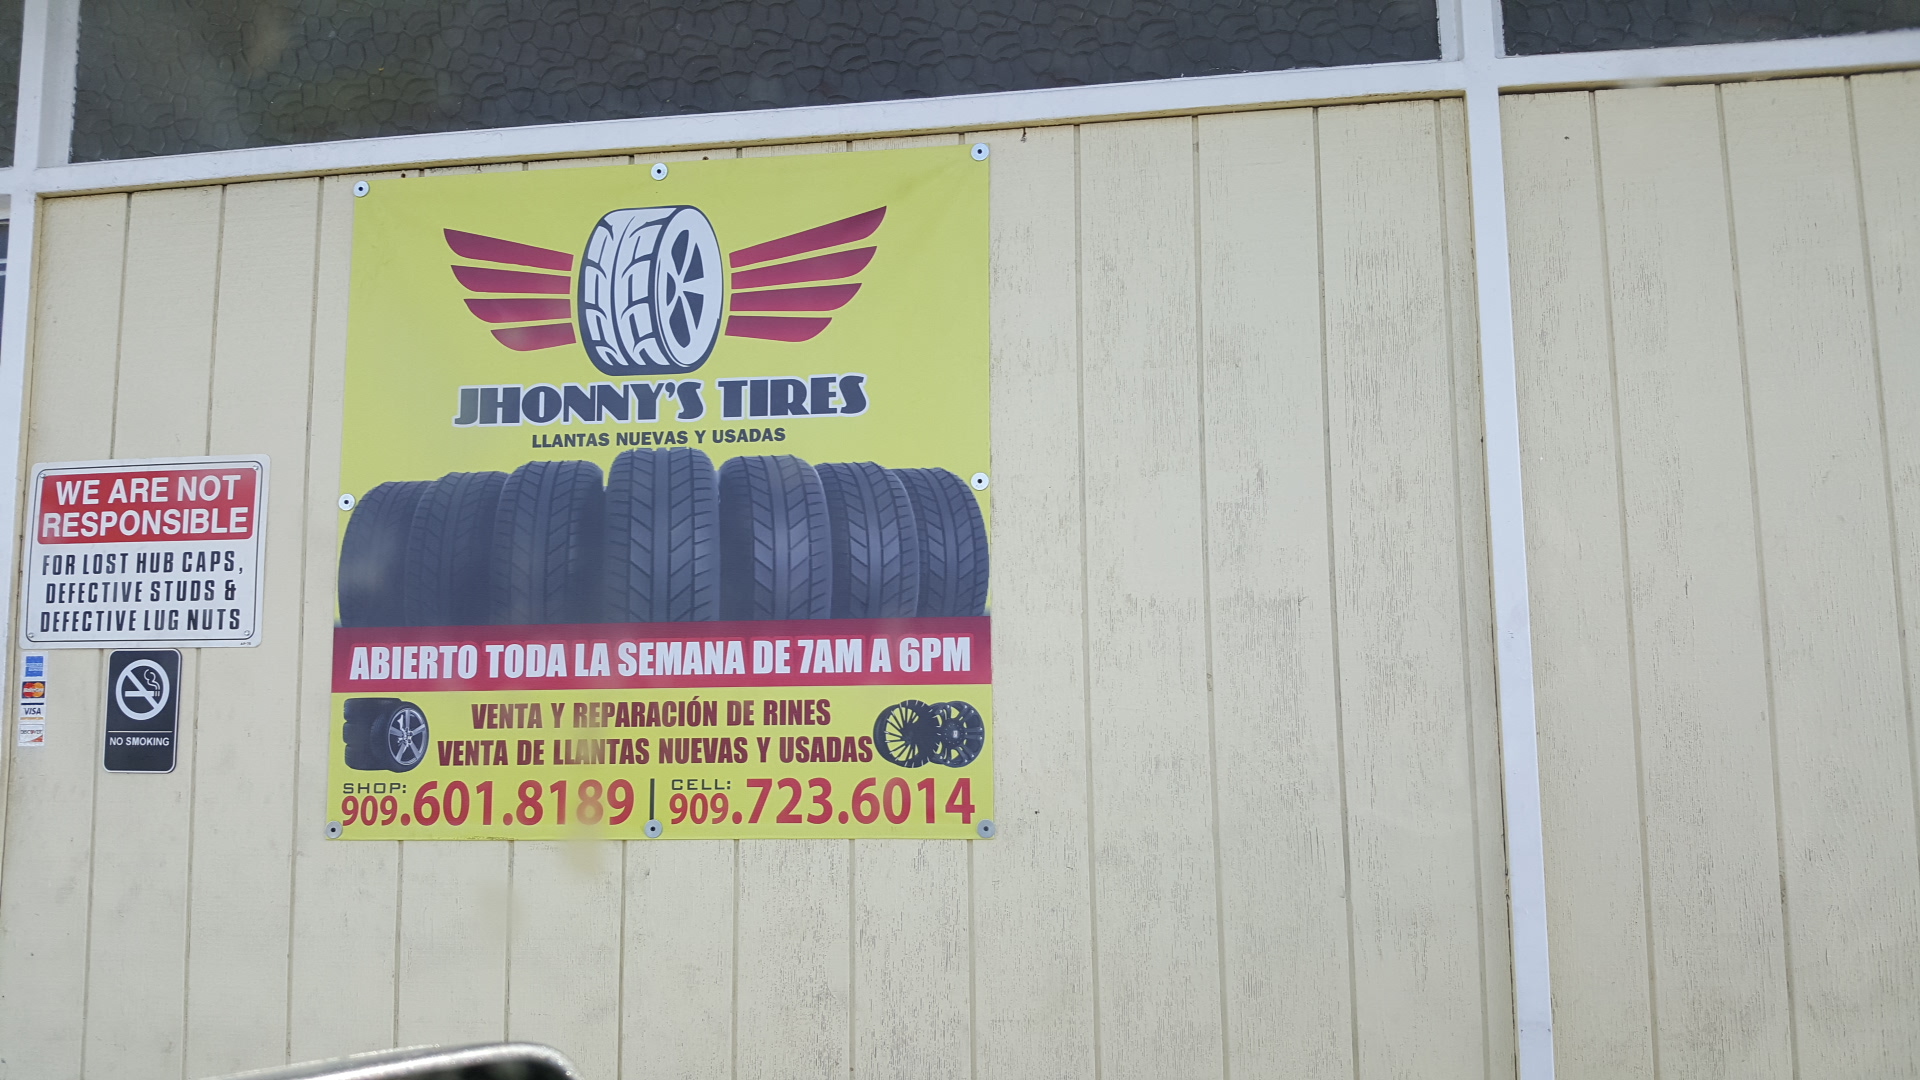 Rodriguez Tire Services